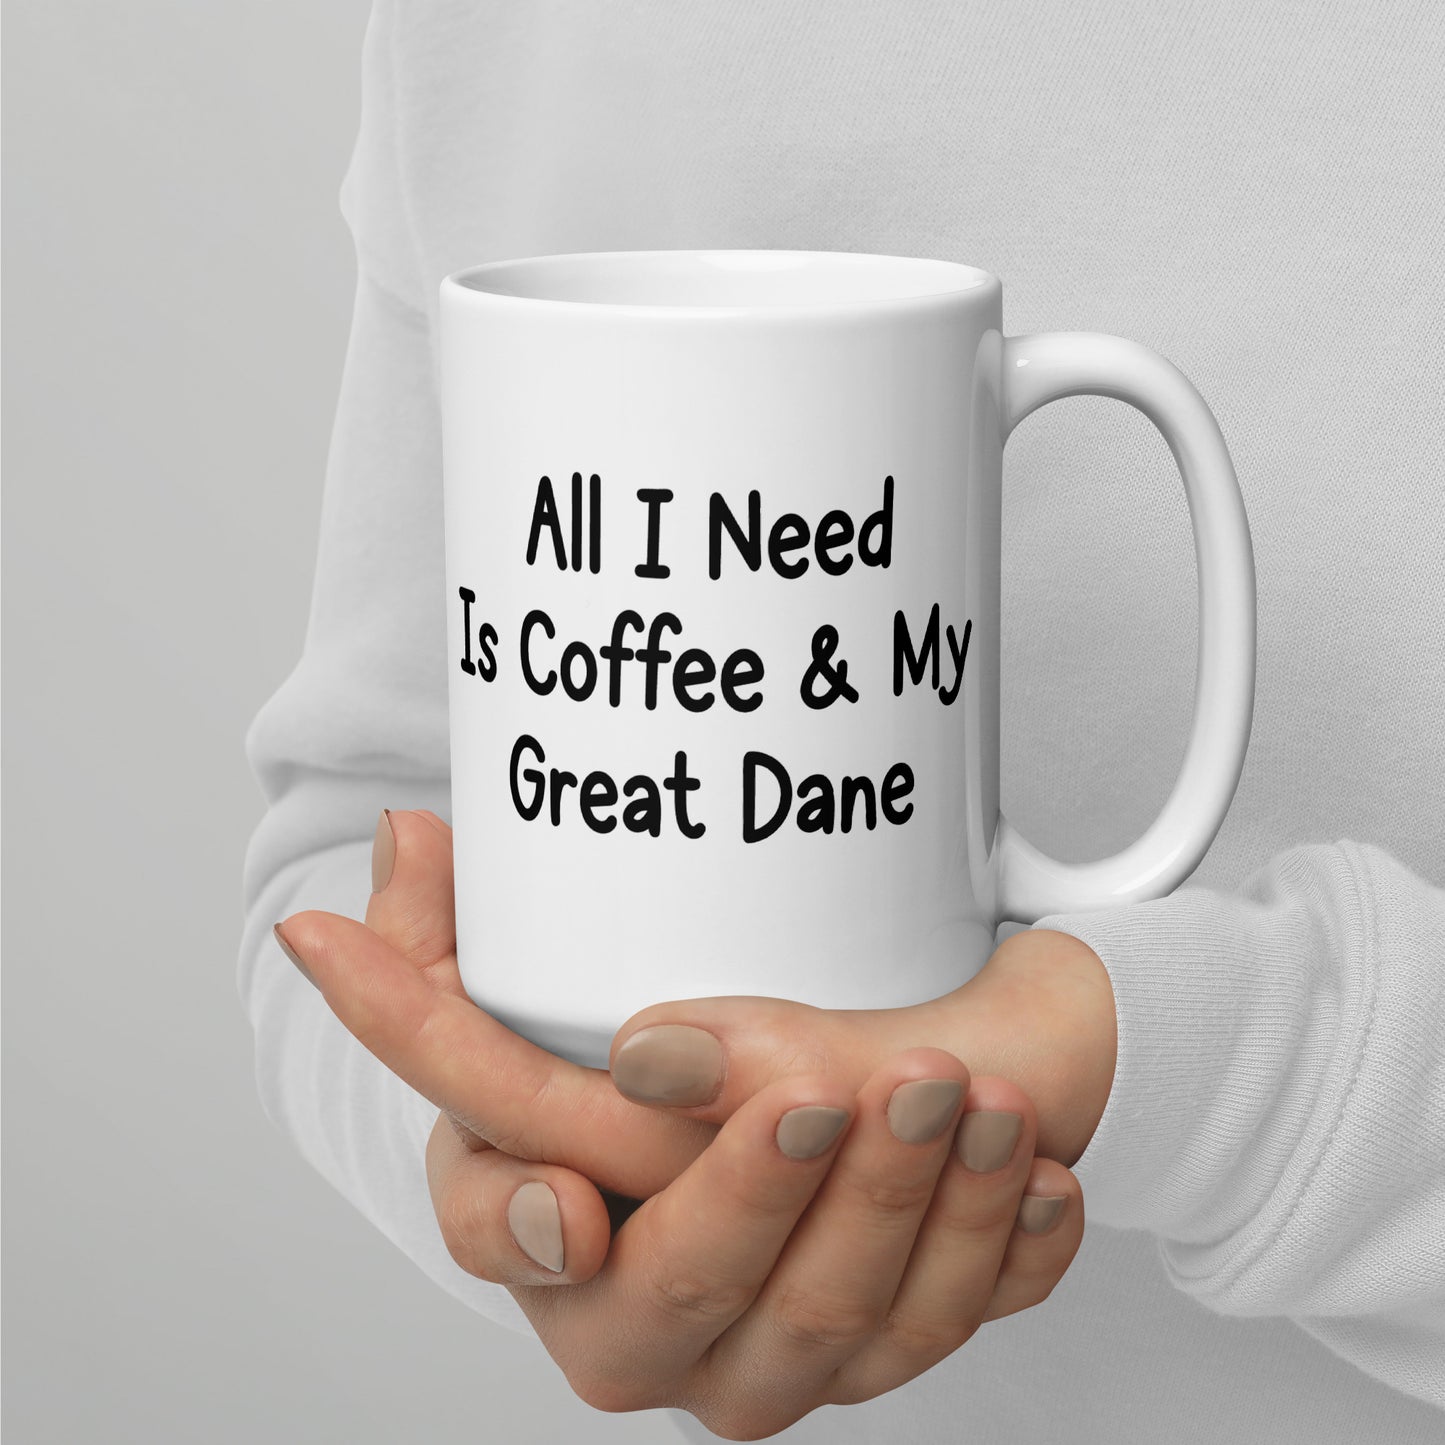 All I need is coffee & my Great Dane mug by Dog Artistry.